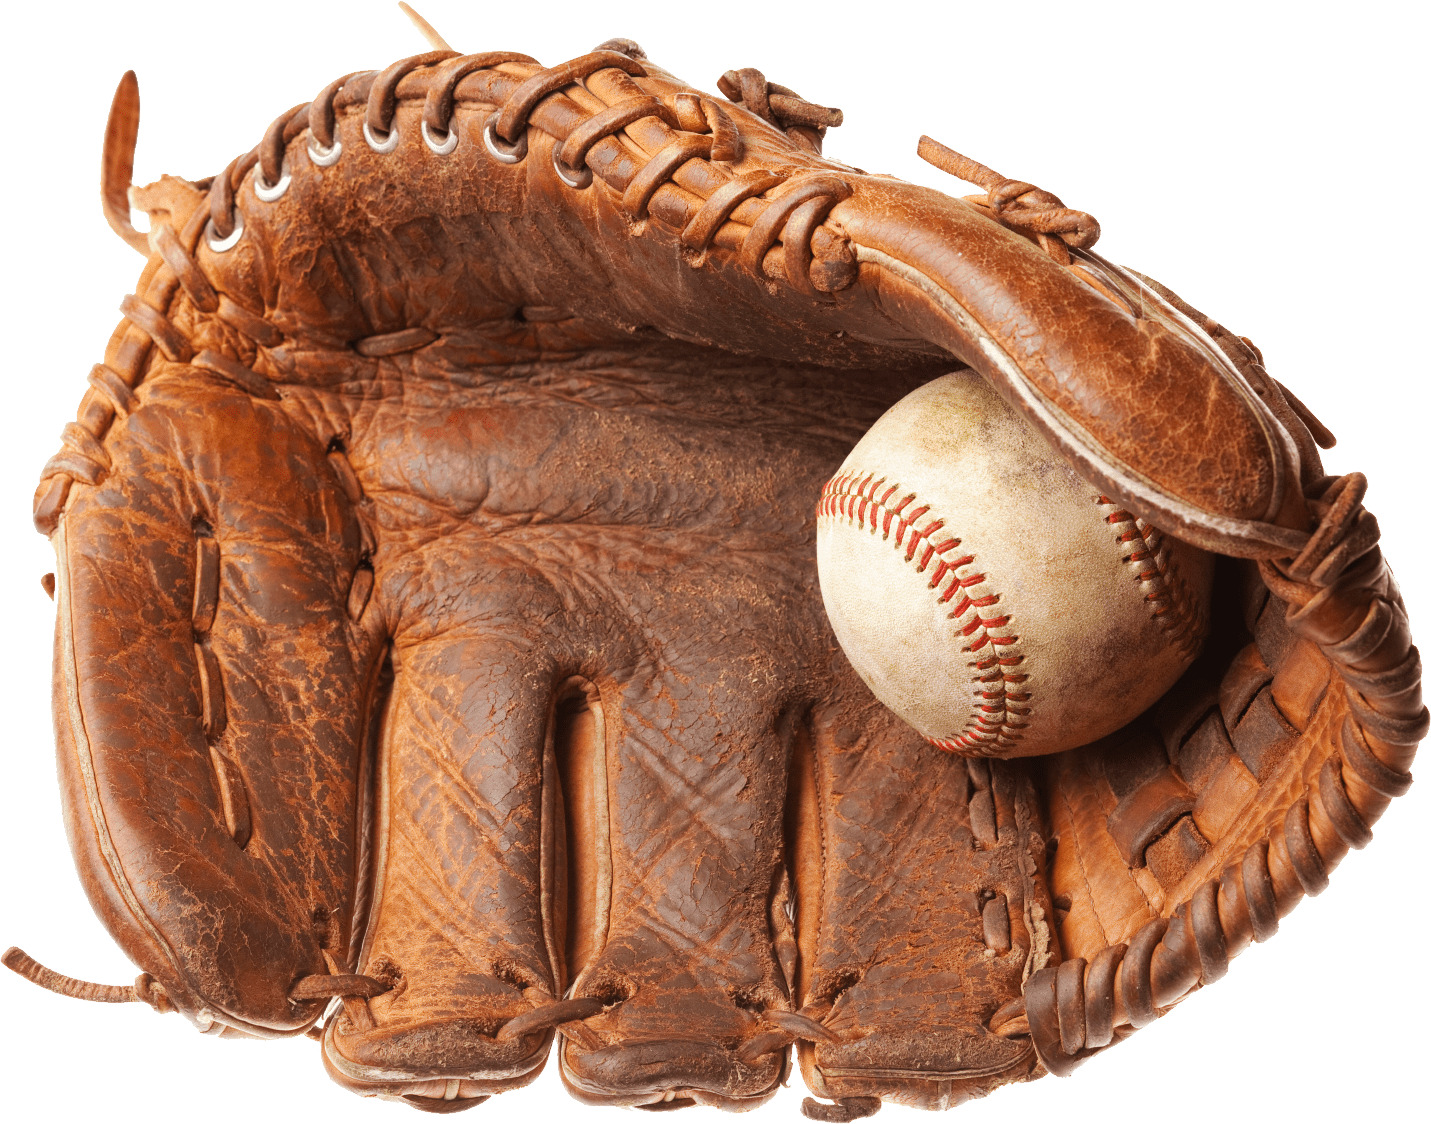 Vintage Baseball Glove icons